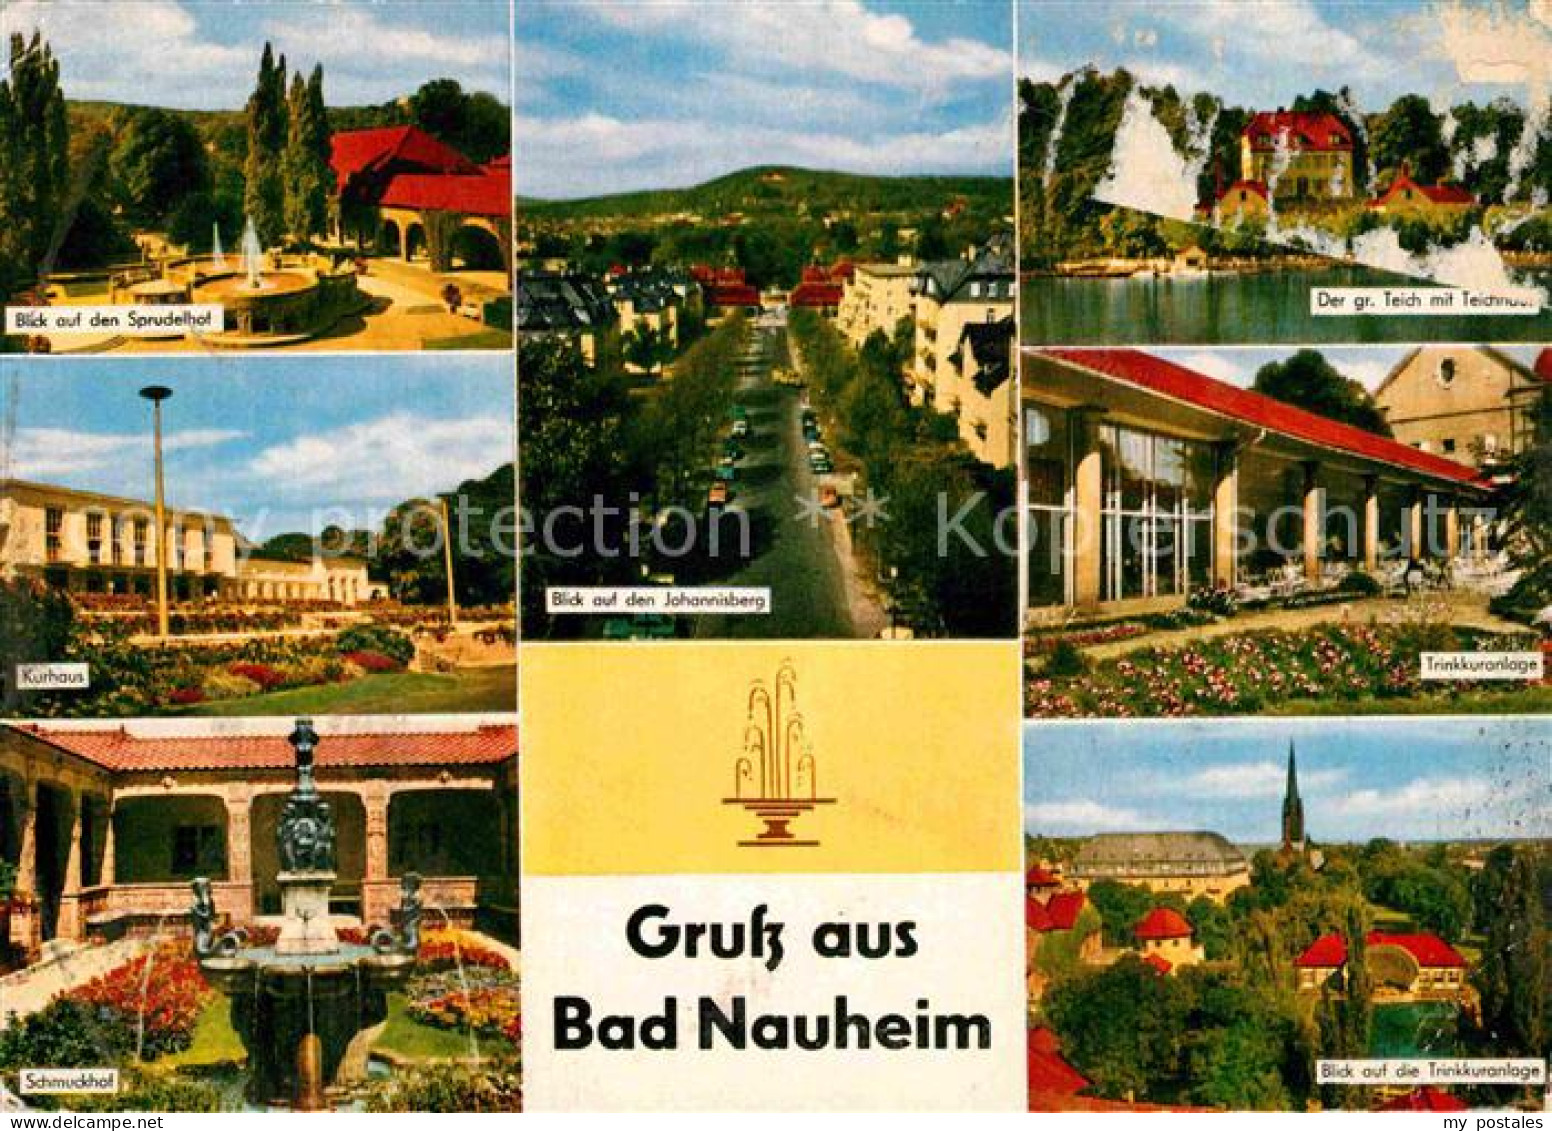 72765258 Bad Nauheim Sprudelhof Grosse Teich Trinkkuranlage Schmuckhof Kurhaus J - Bad Nauheim